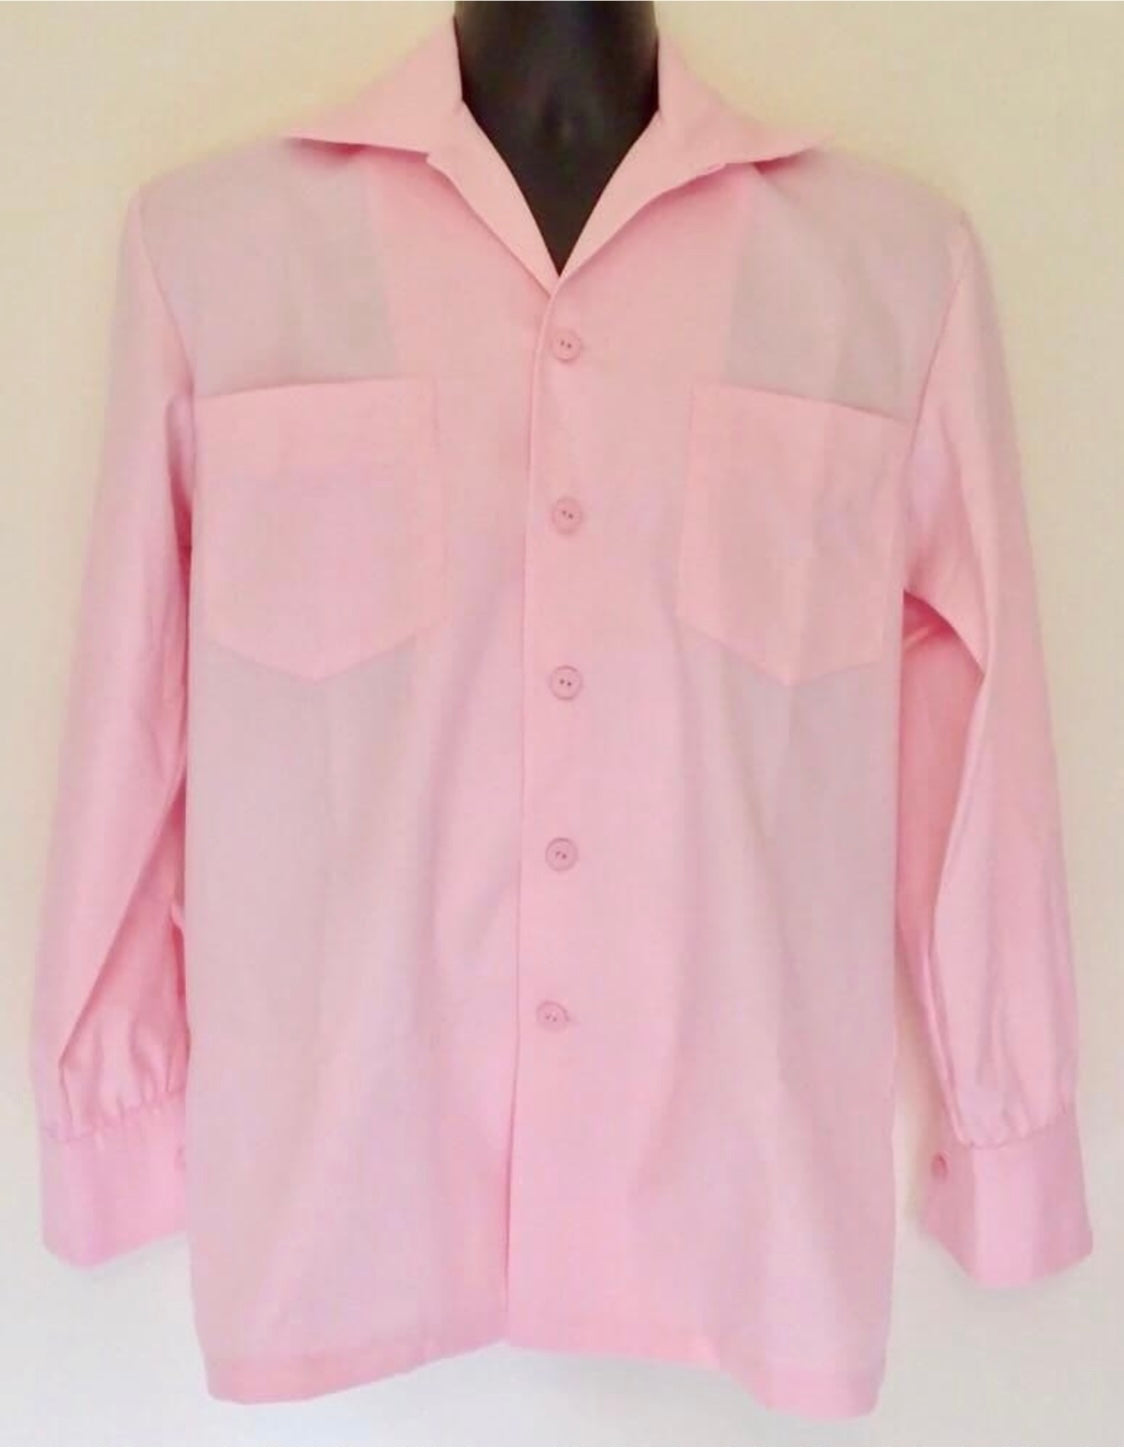 Vintage 1950s pink gabardine shirt